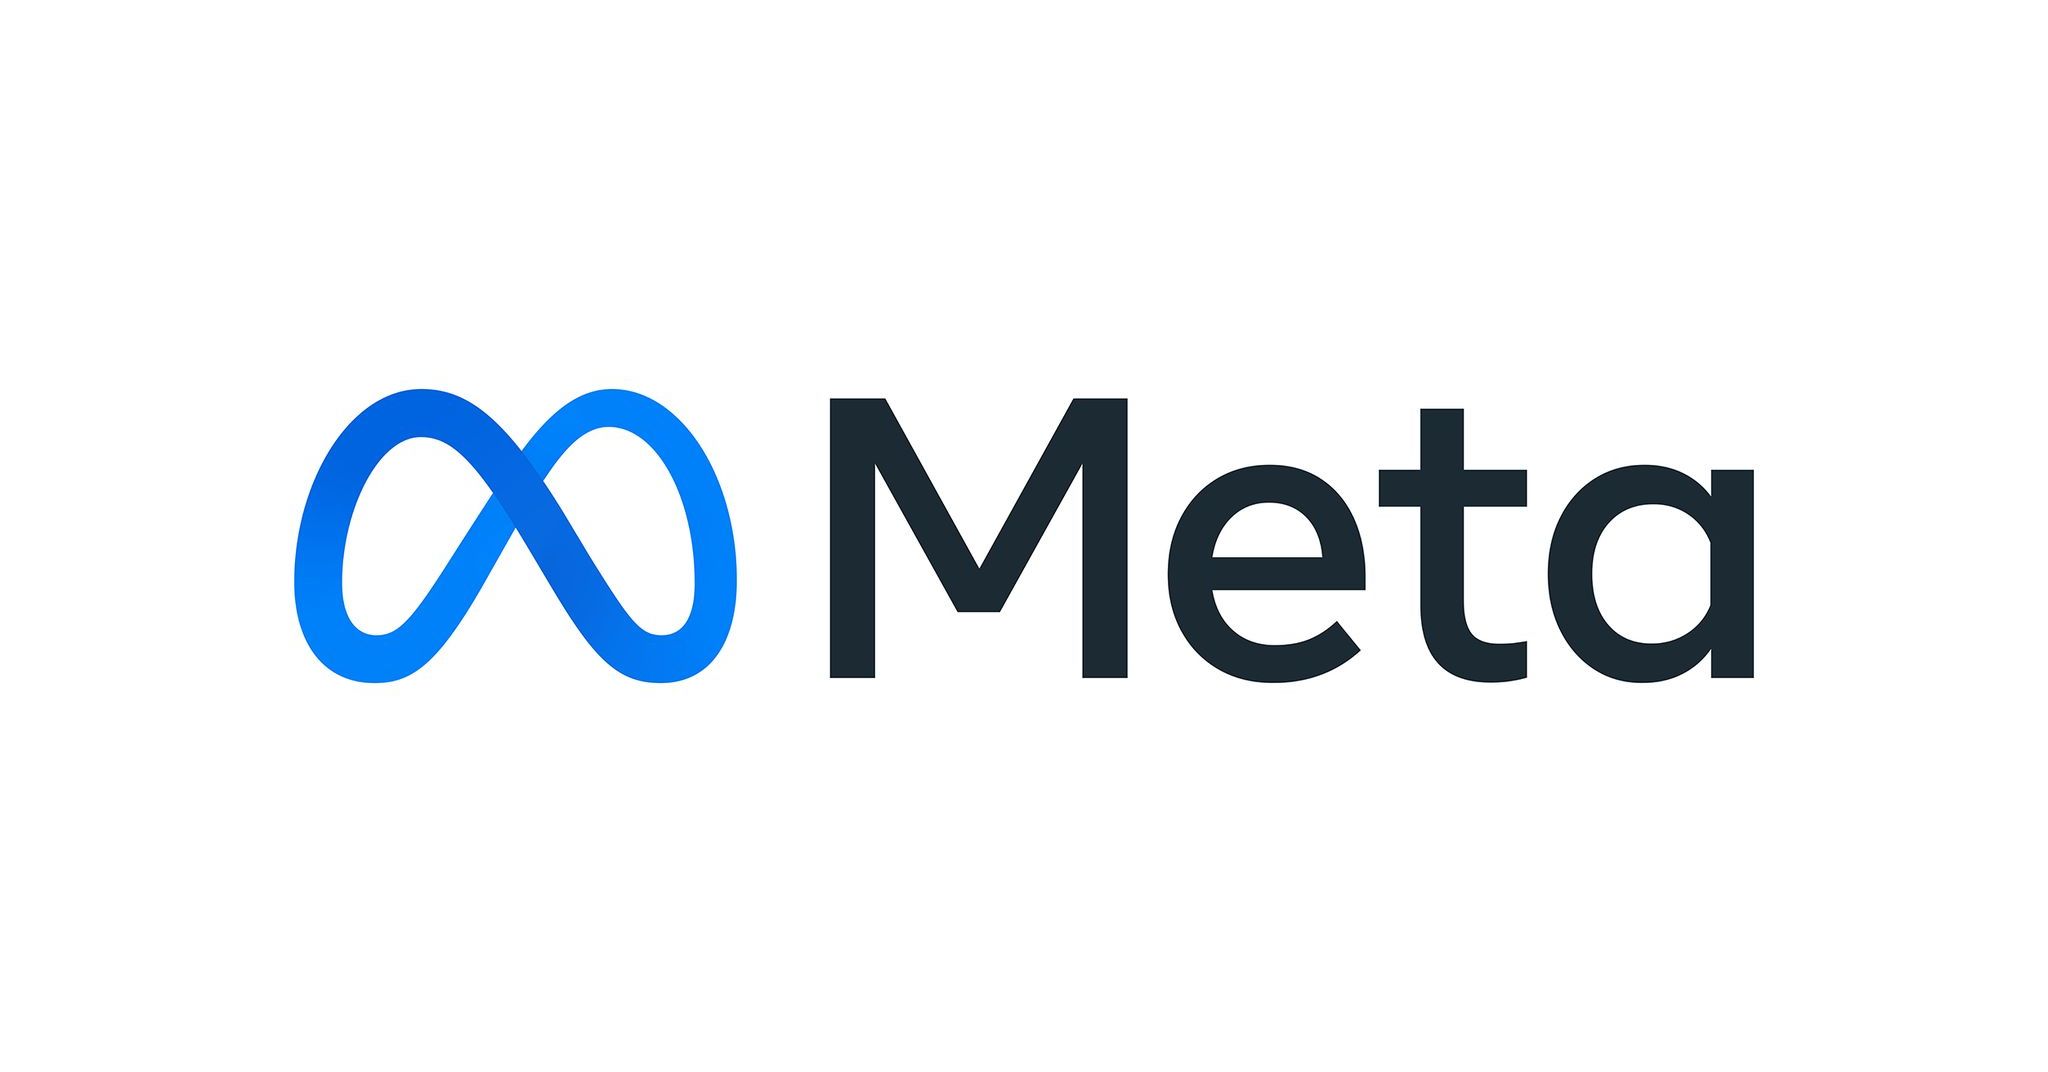 Meta、社員1万1000人解雇を正式発表　CEO「世界のオンライン移行、期待通りにならず」